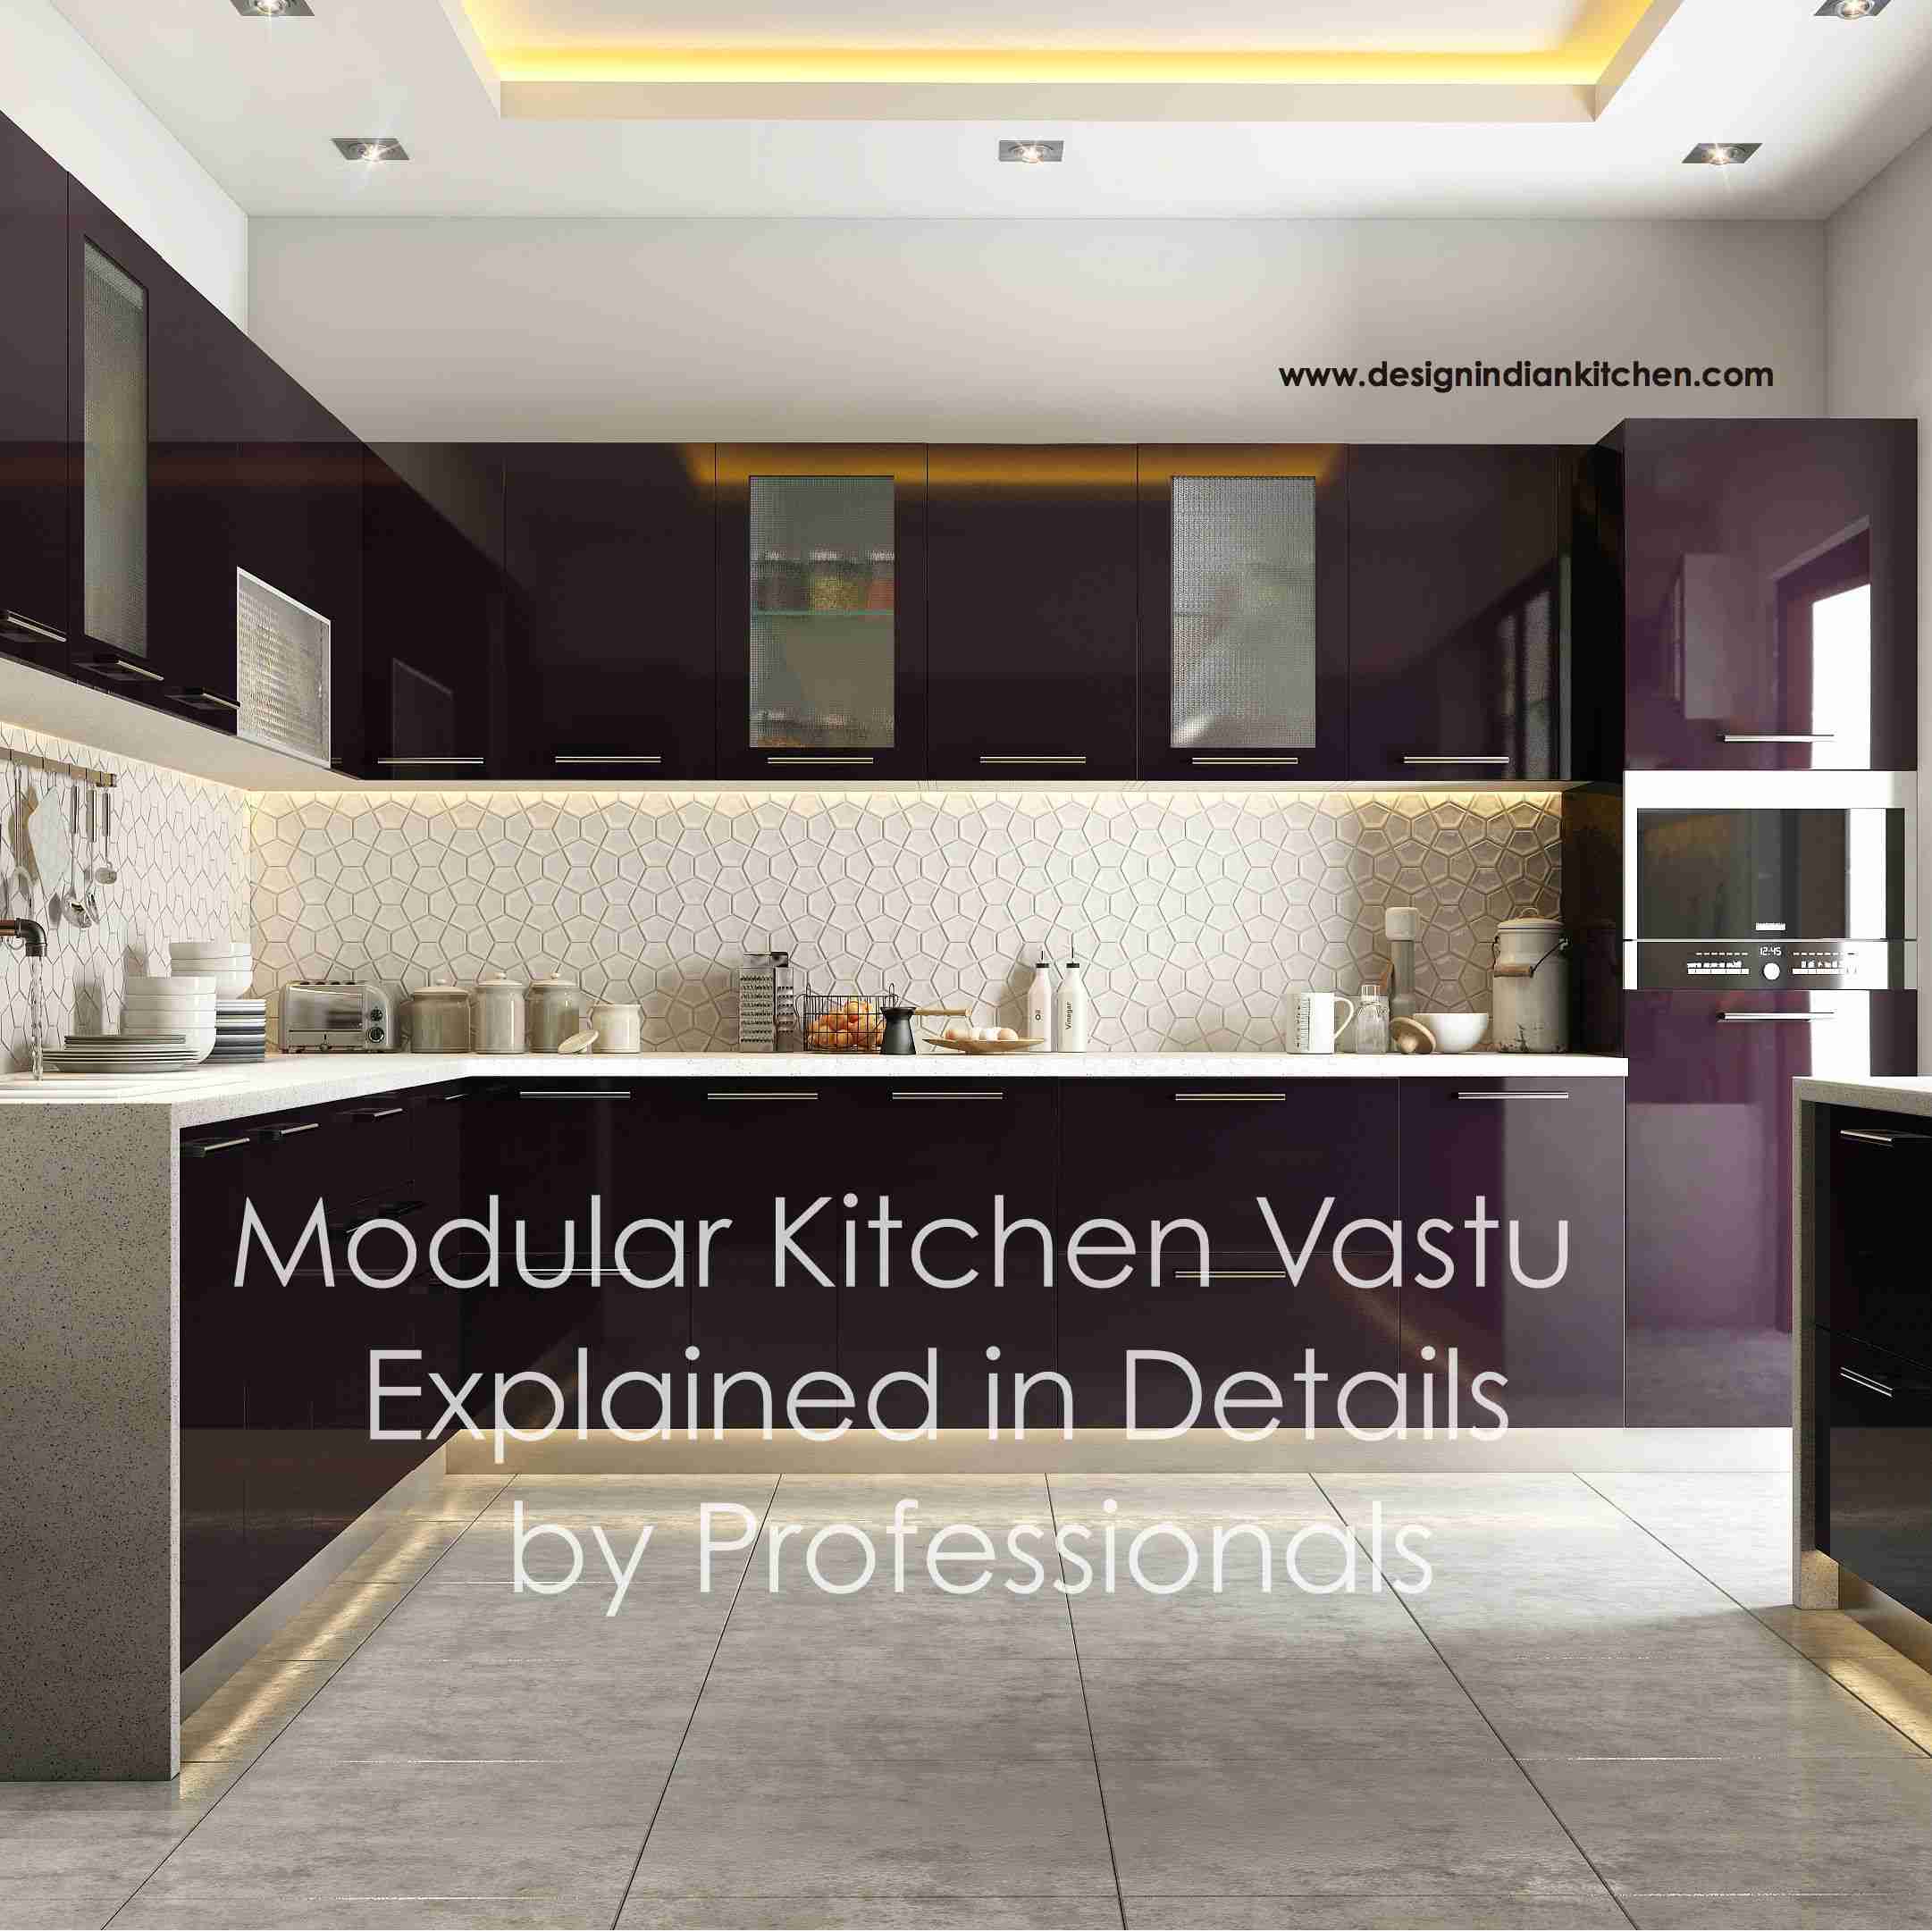 vastu guidance and tips for modular kitchen